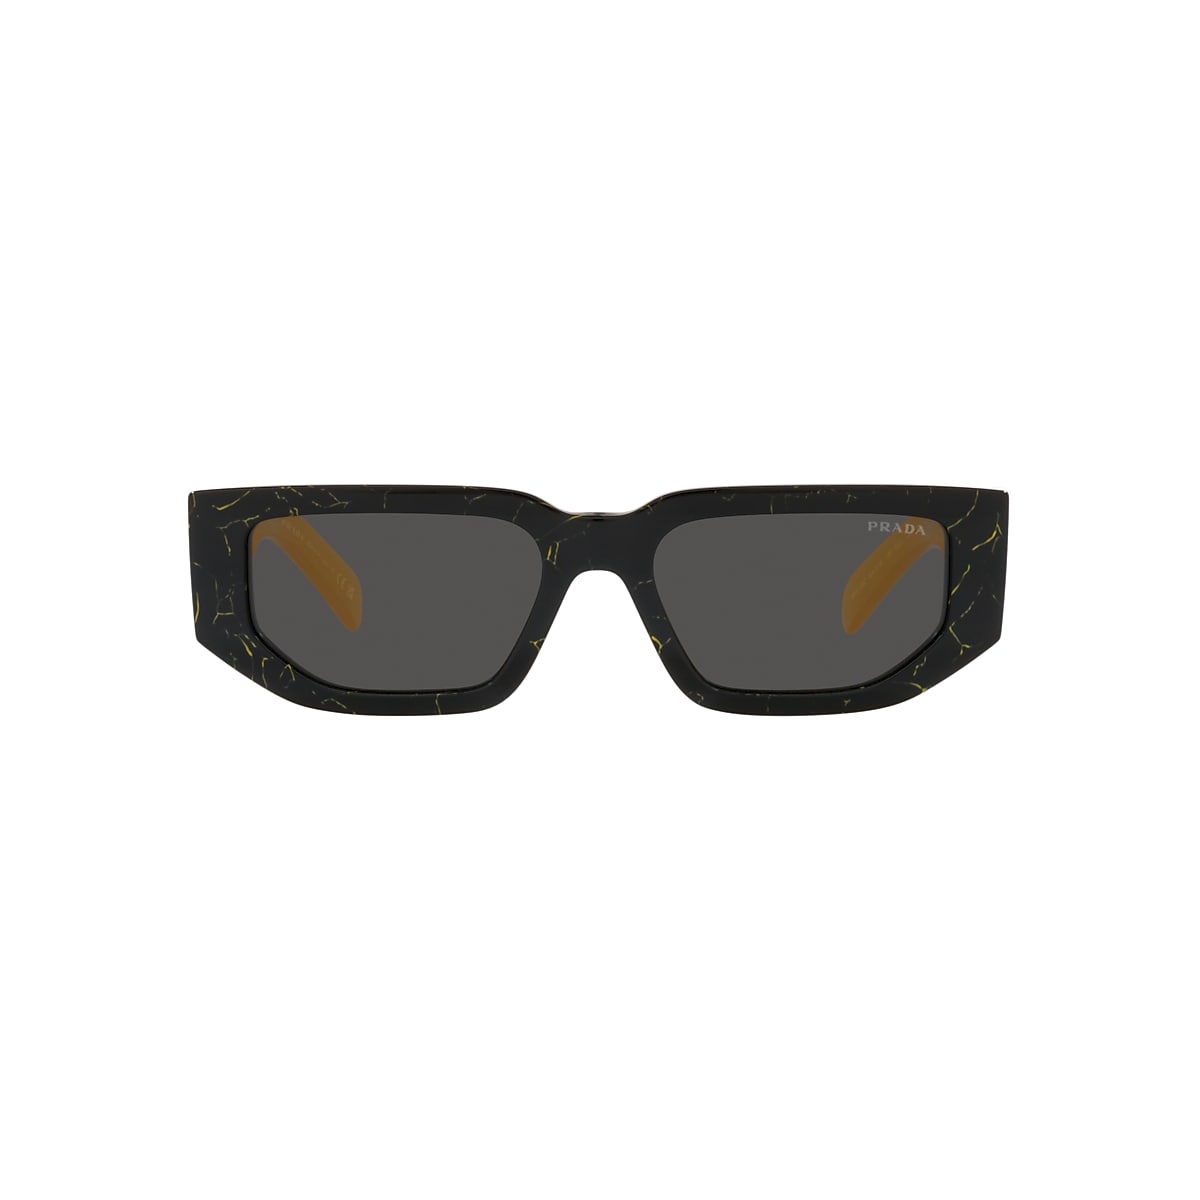 Prada PR 09ZS 54 Dark Grey & Black Yellow Marble Sunglasses 